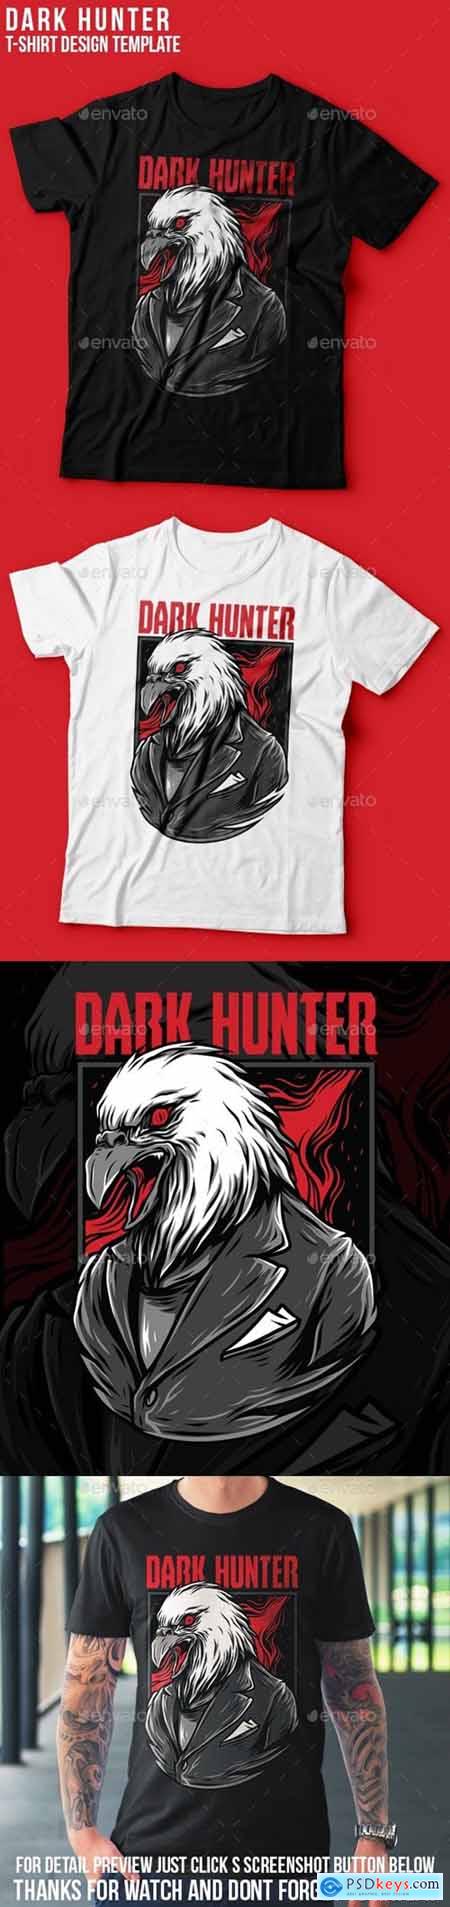 Graphicriver Dark Hunter T-Shirt Design